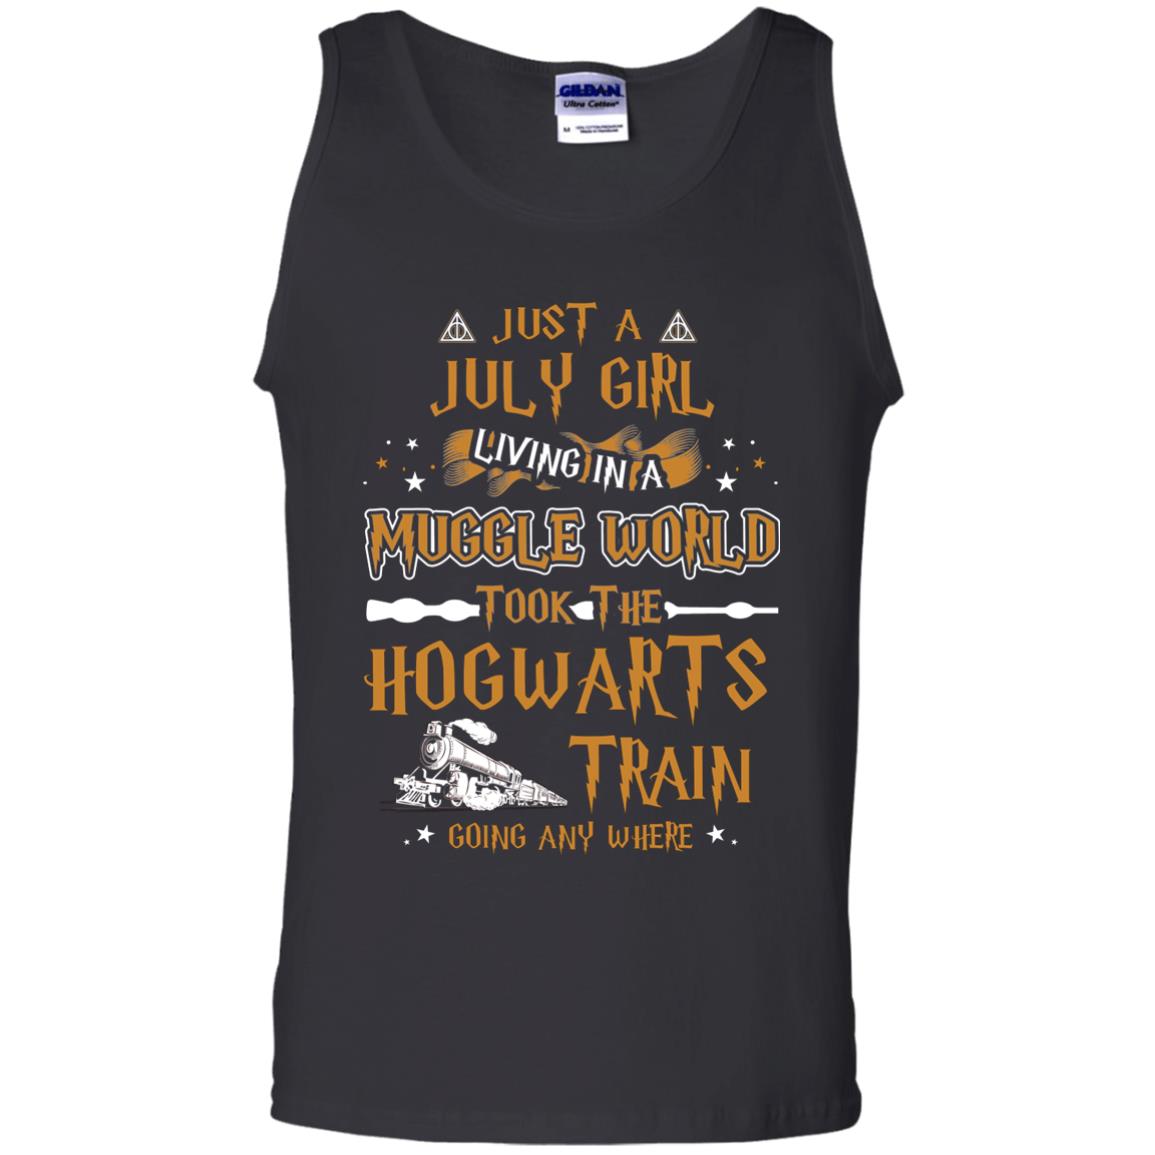 Just A July Girl Living In A Muggle World Took The Hogwarts Train Going Any WhereG220 Gildan 100% Cotton Tank Top